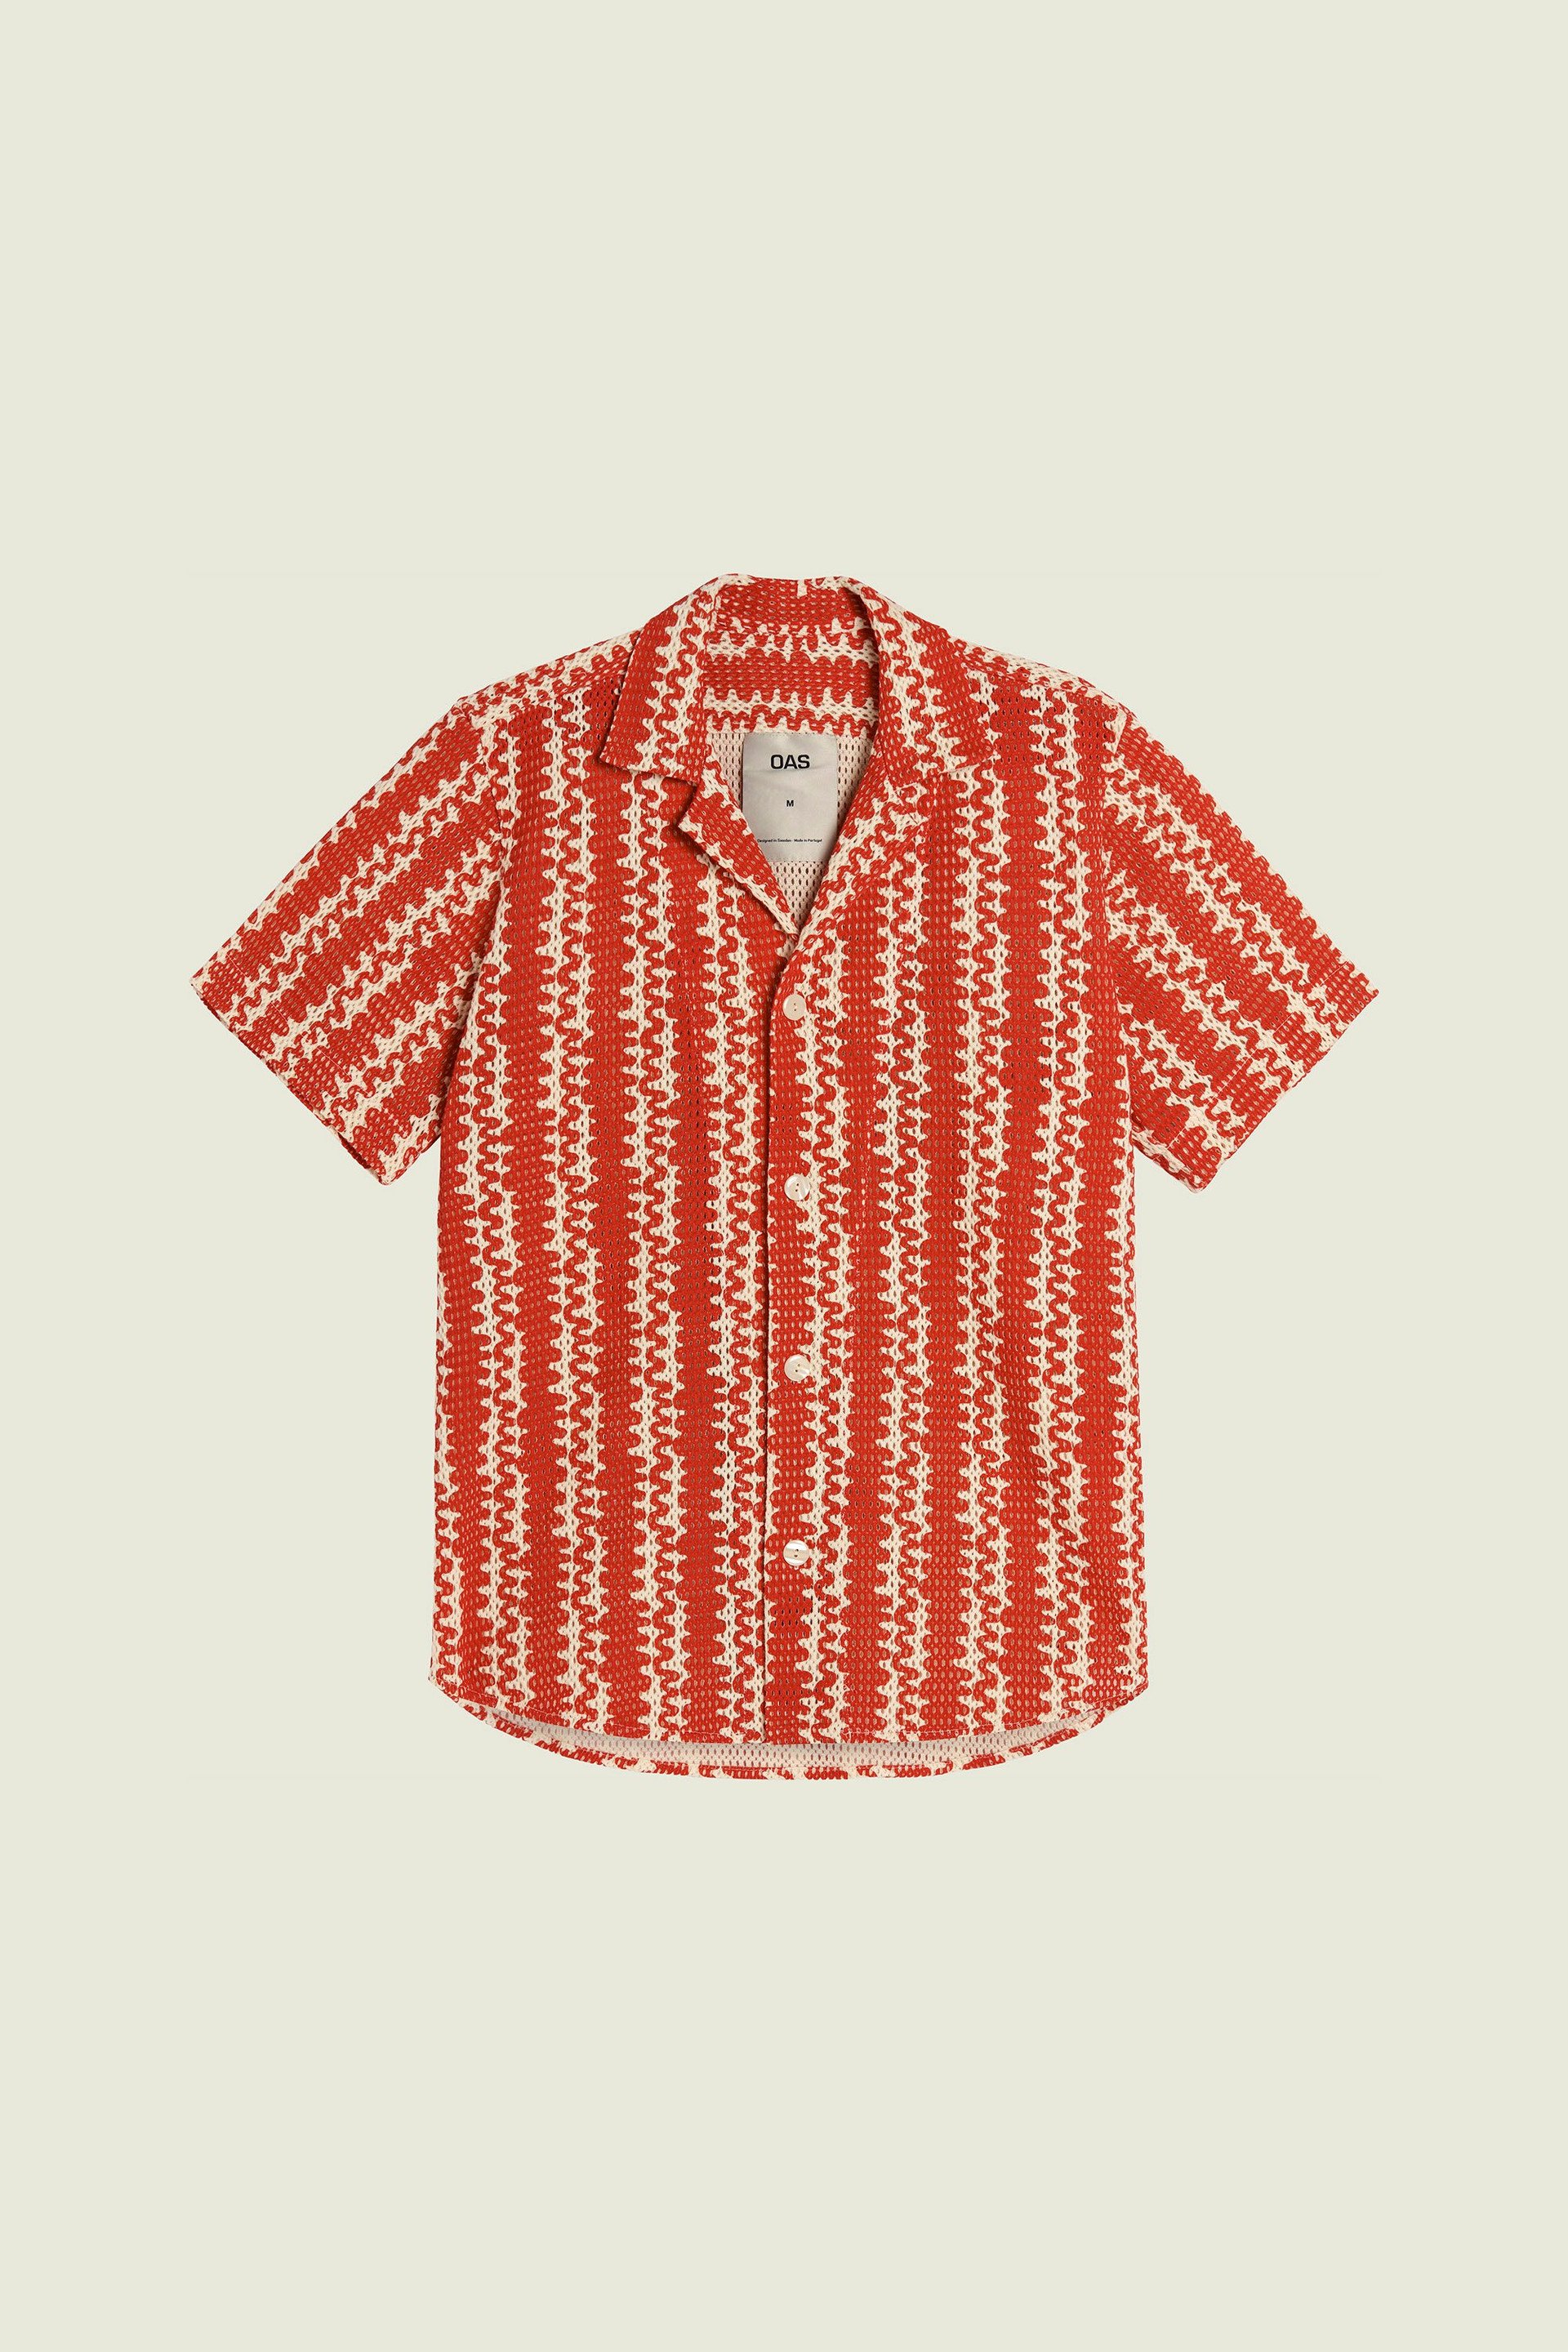 Red Scribble Cuba Net Shirt